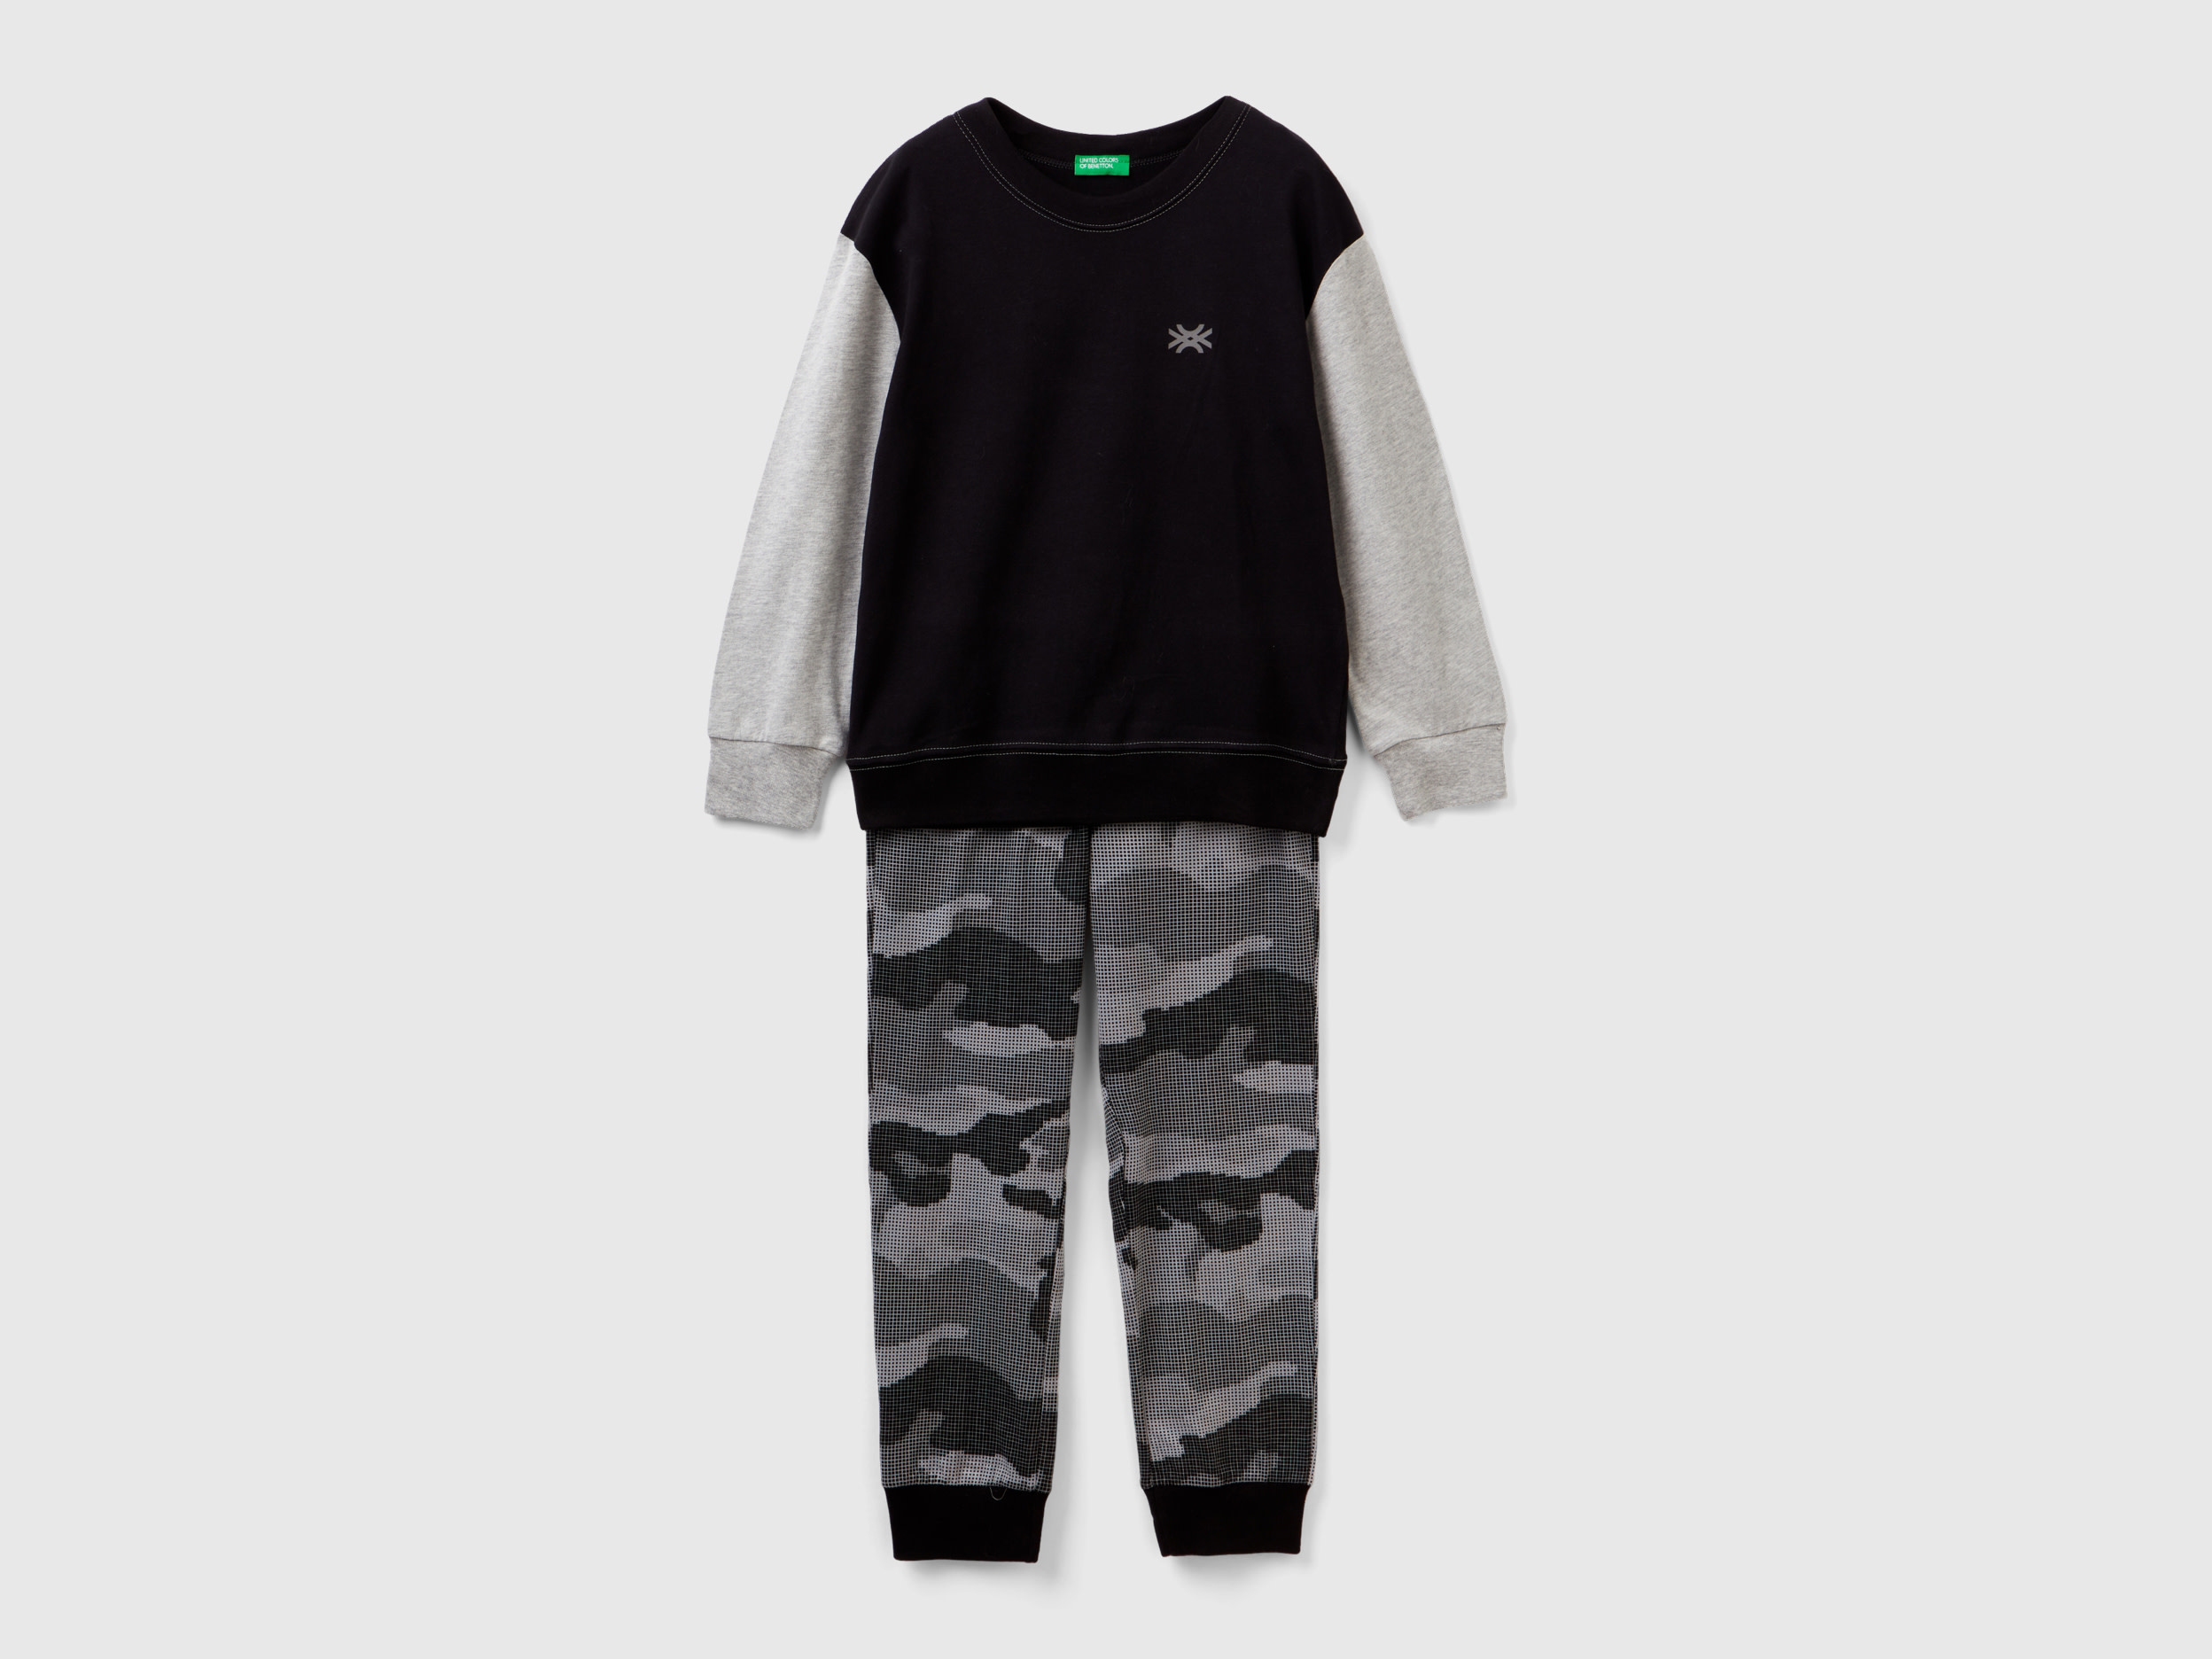 Benetton, Pyjamas With Camouflage Bottoms, size L, Black, Kids